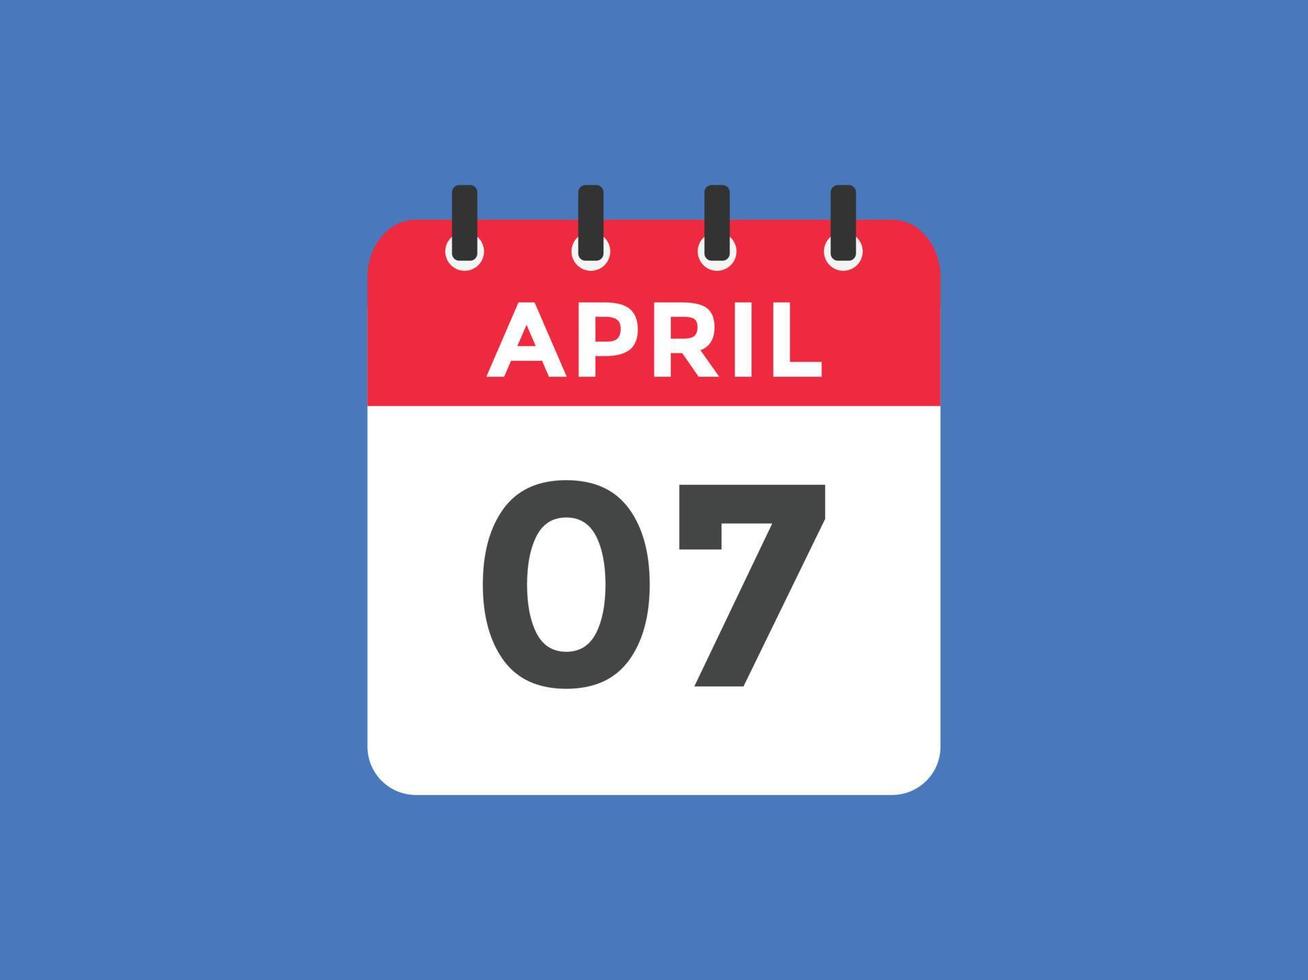 april 7 calendar reminder. 7th april daily calendar icon template. Calendar 7th april icon Design template. Vector illustration